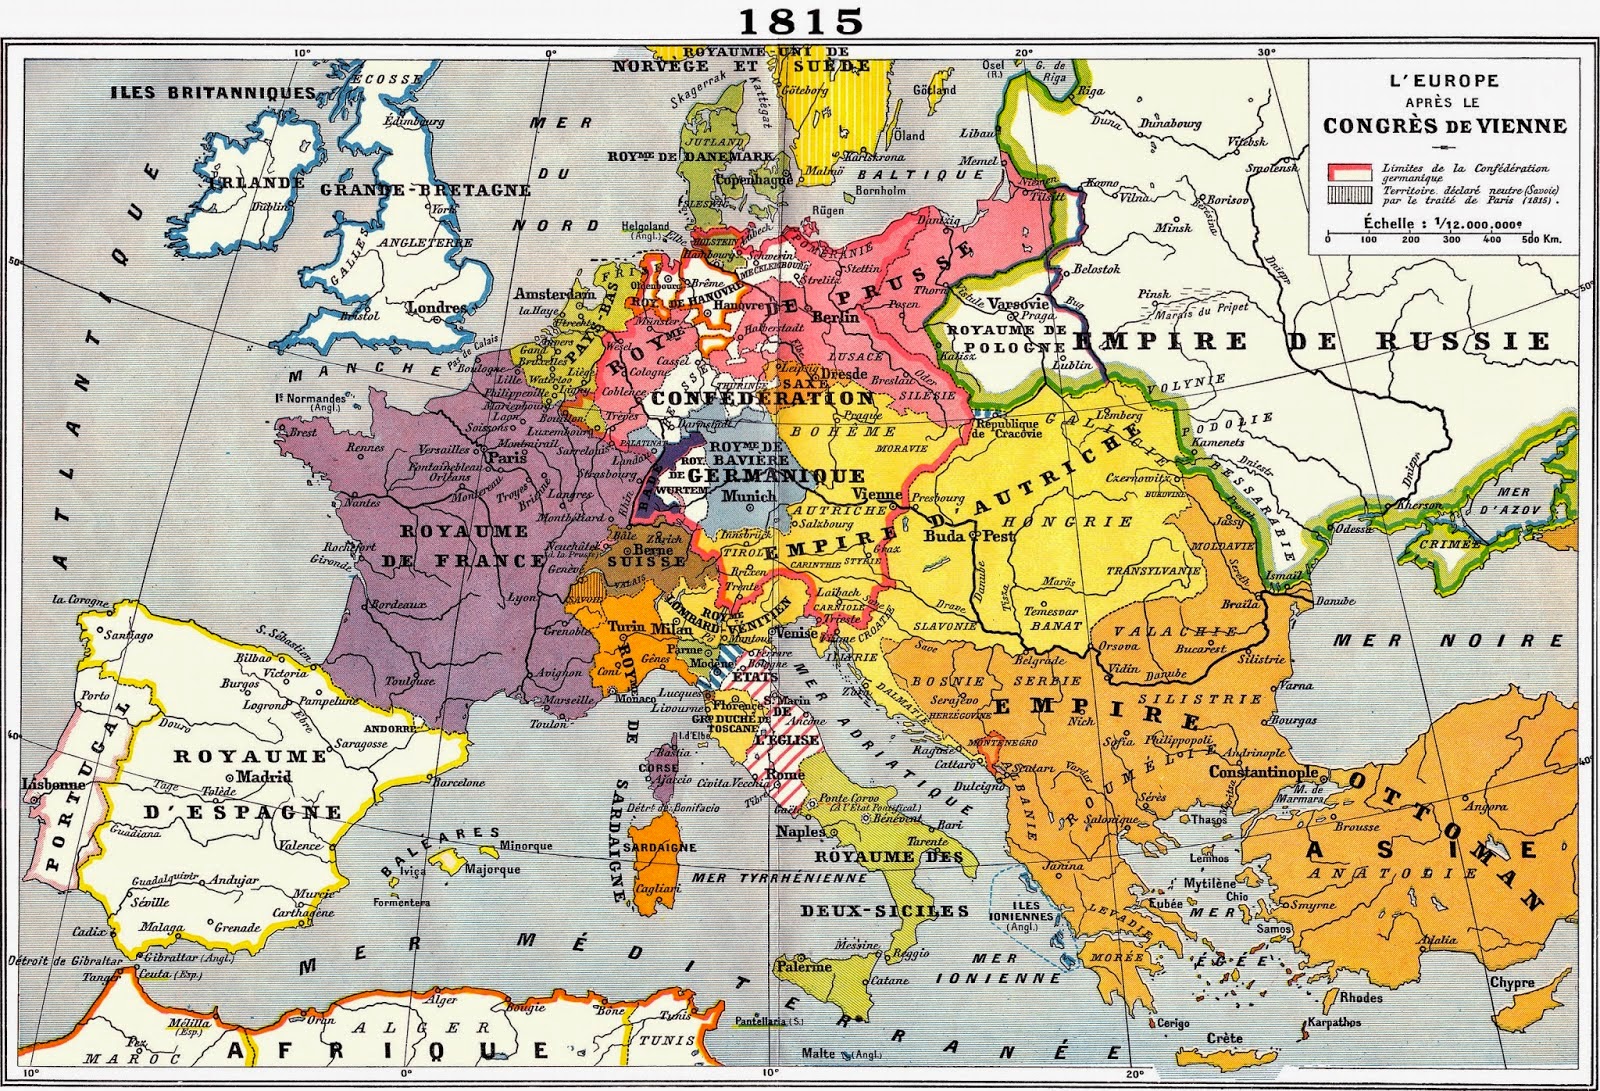 Mapa del dia: Europa 1815, solament fa 200 anys